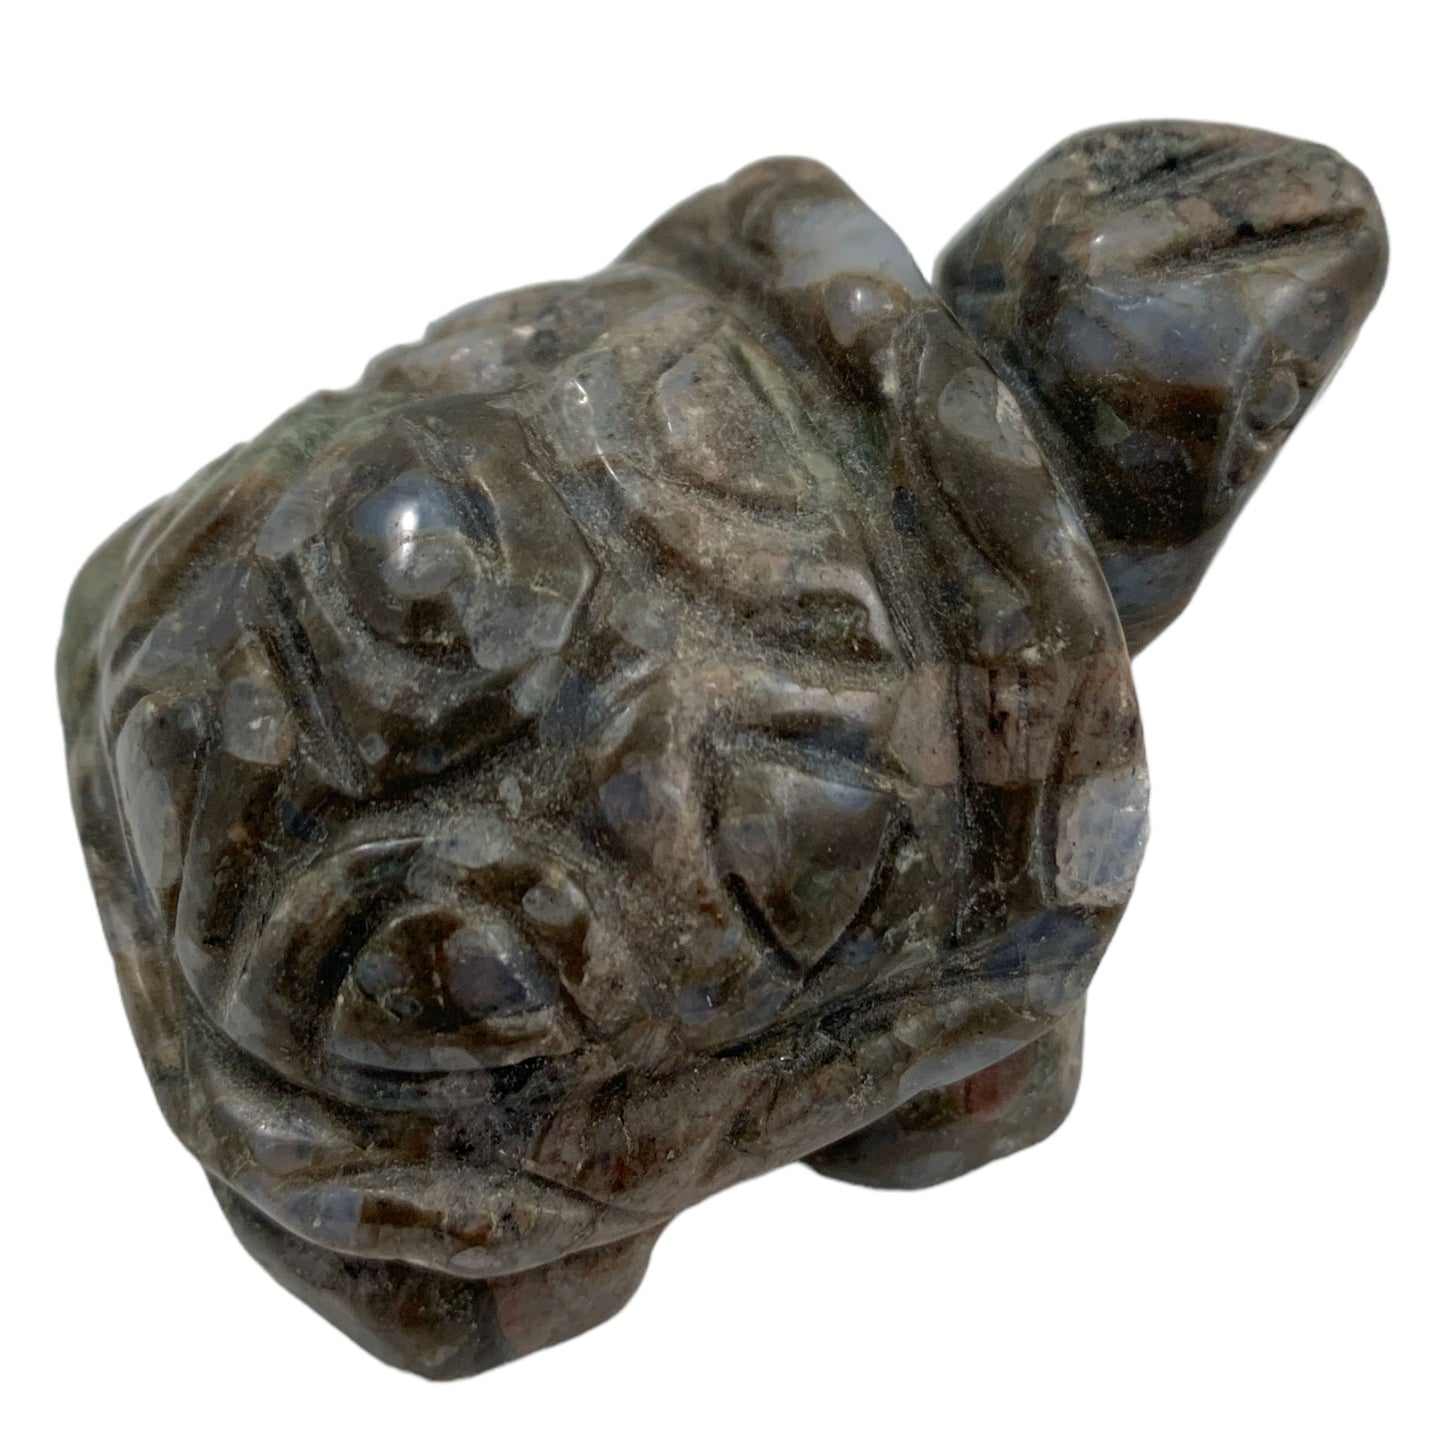 Petite tortue - RHYOLITE - LLANITE - QUE SERA - sculpté à la main - NEW622